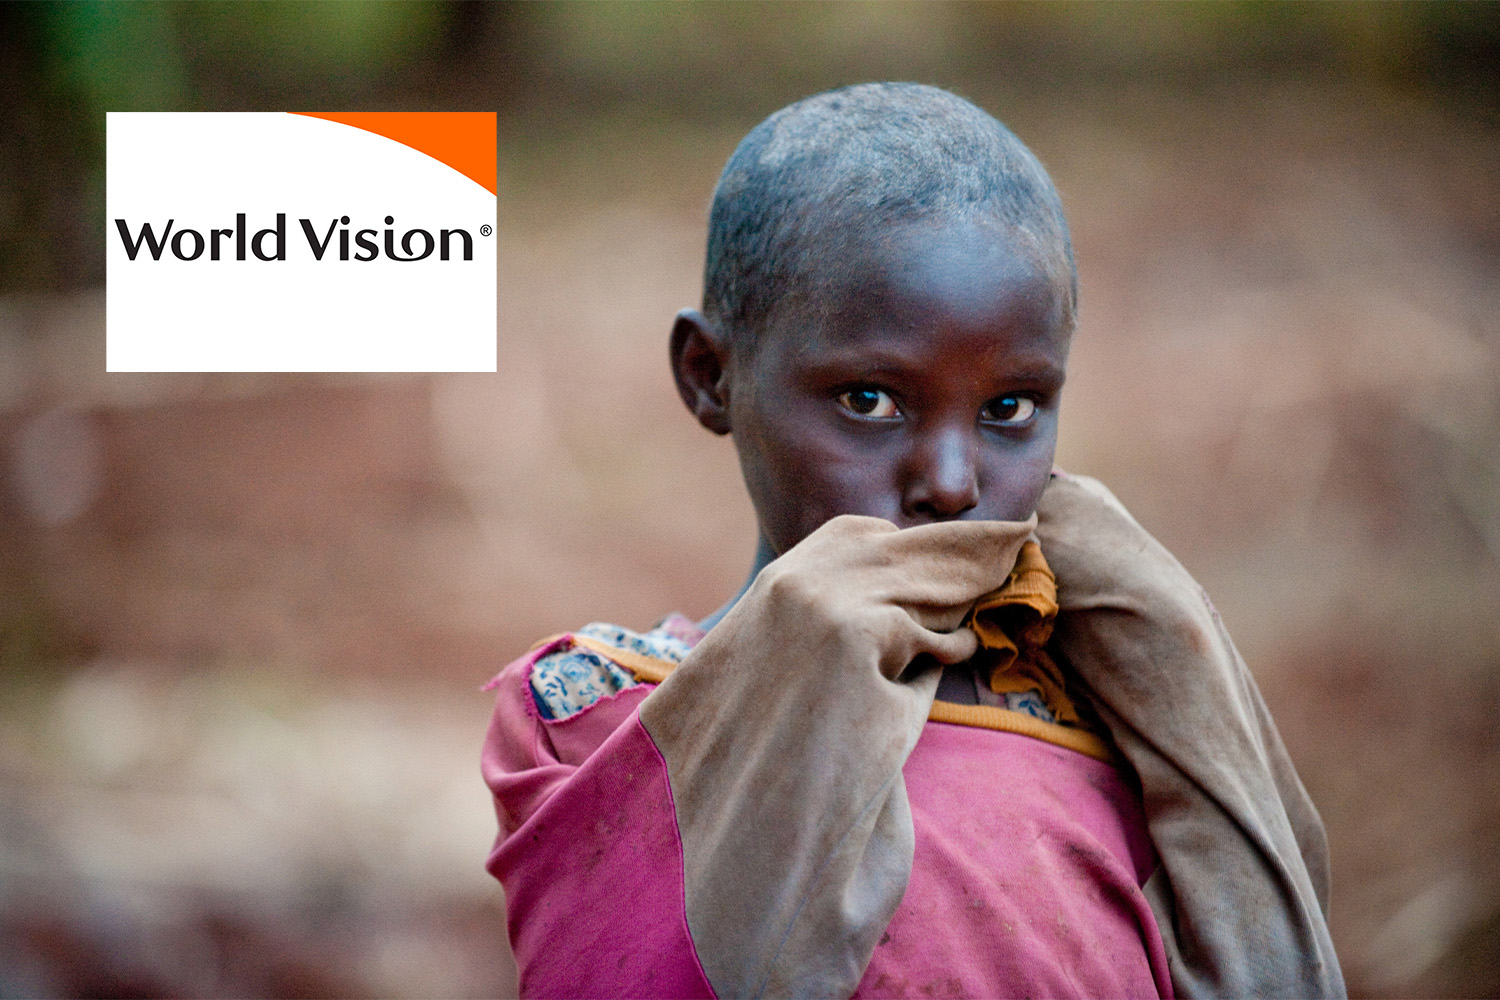 African child wearing a pink jacket, "World Vision" logo at top left corner 